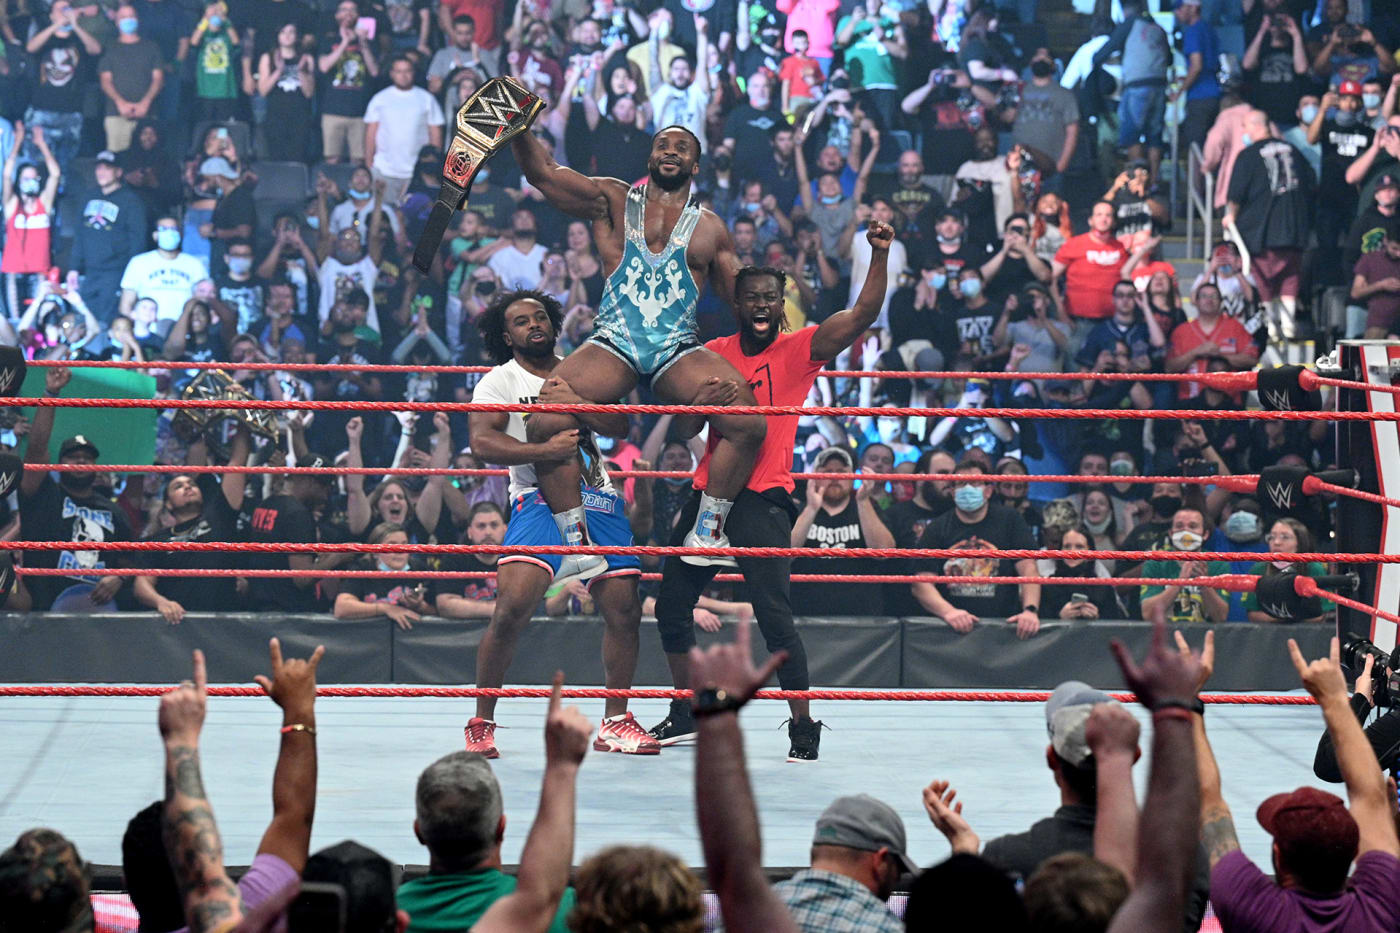 Big E wins the WWE Championship, WWE Raw, September 13, 2021